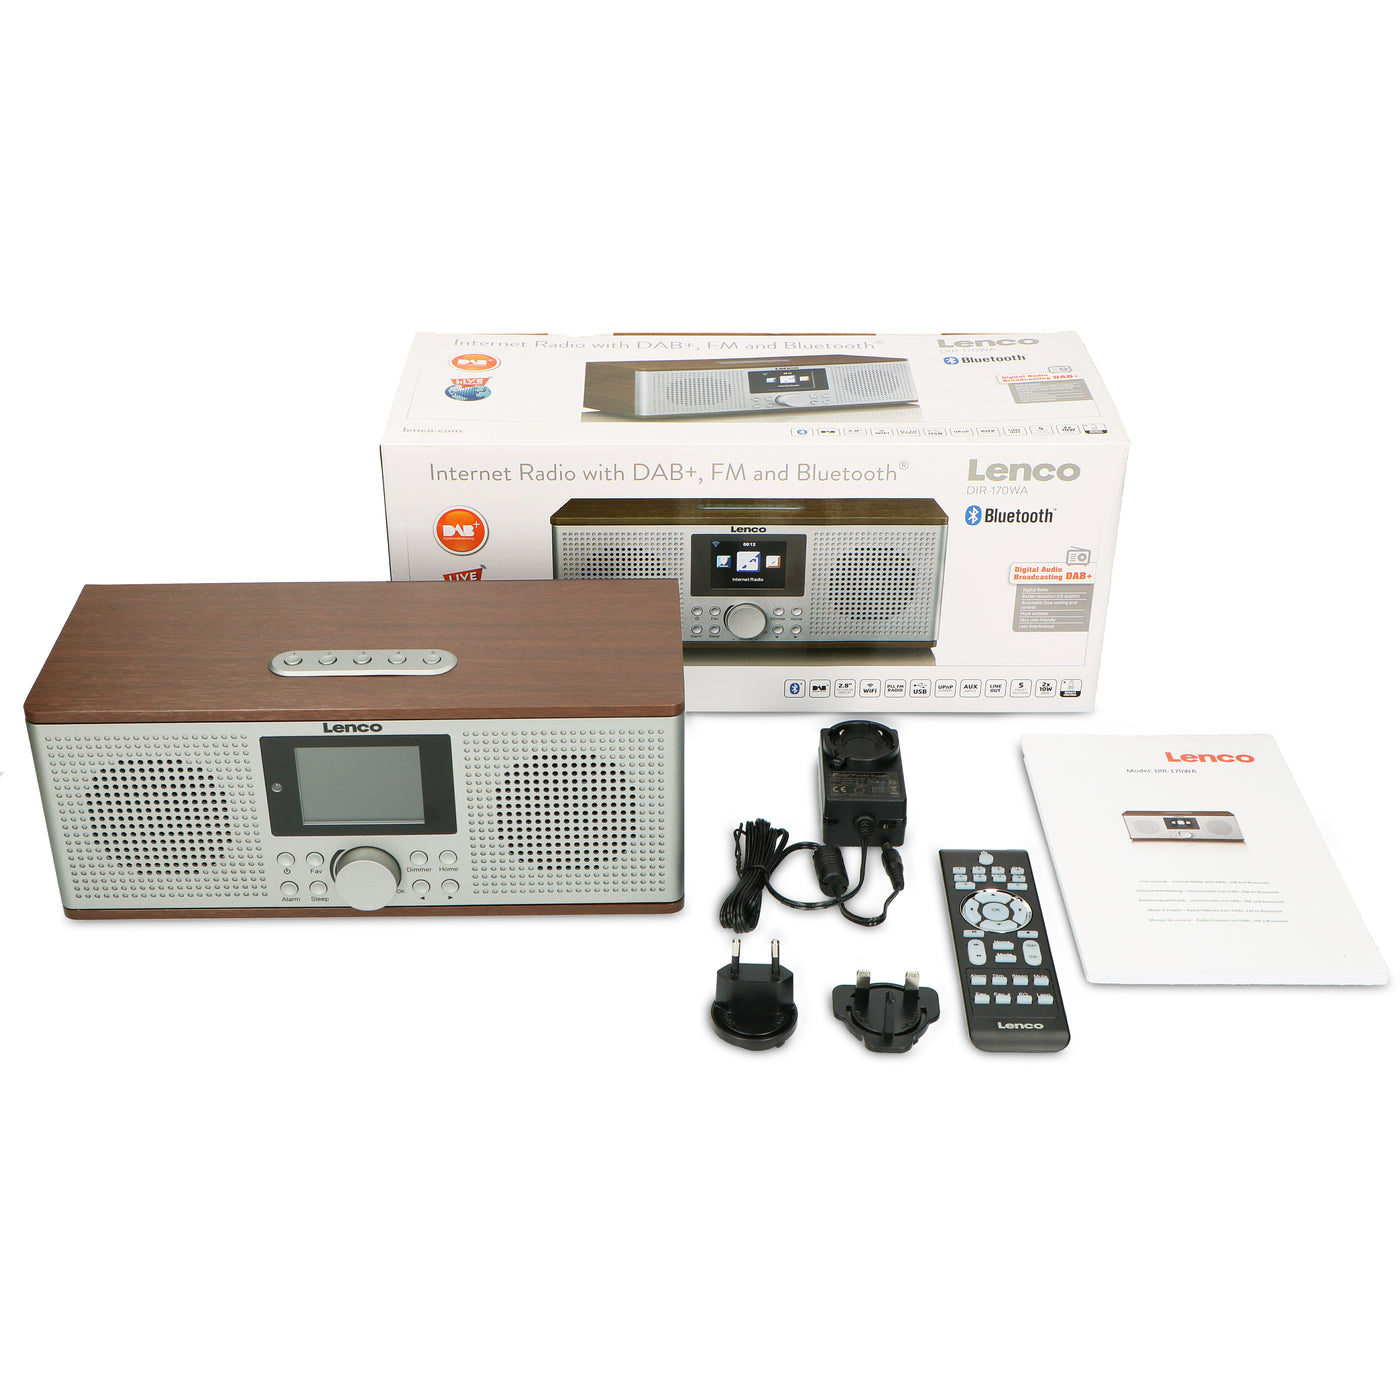 DIR-170WA and radio, - DAB+, Lenco-Catalog – Internet with Smart FM W Bluetooth® LENCO